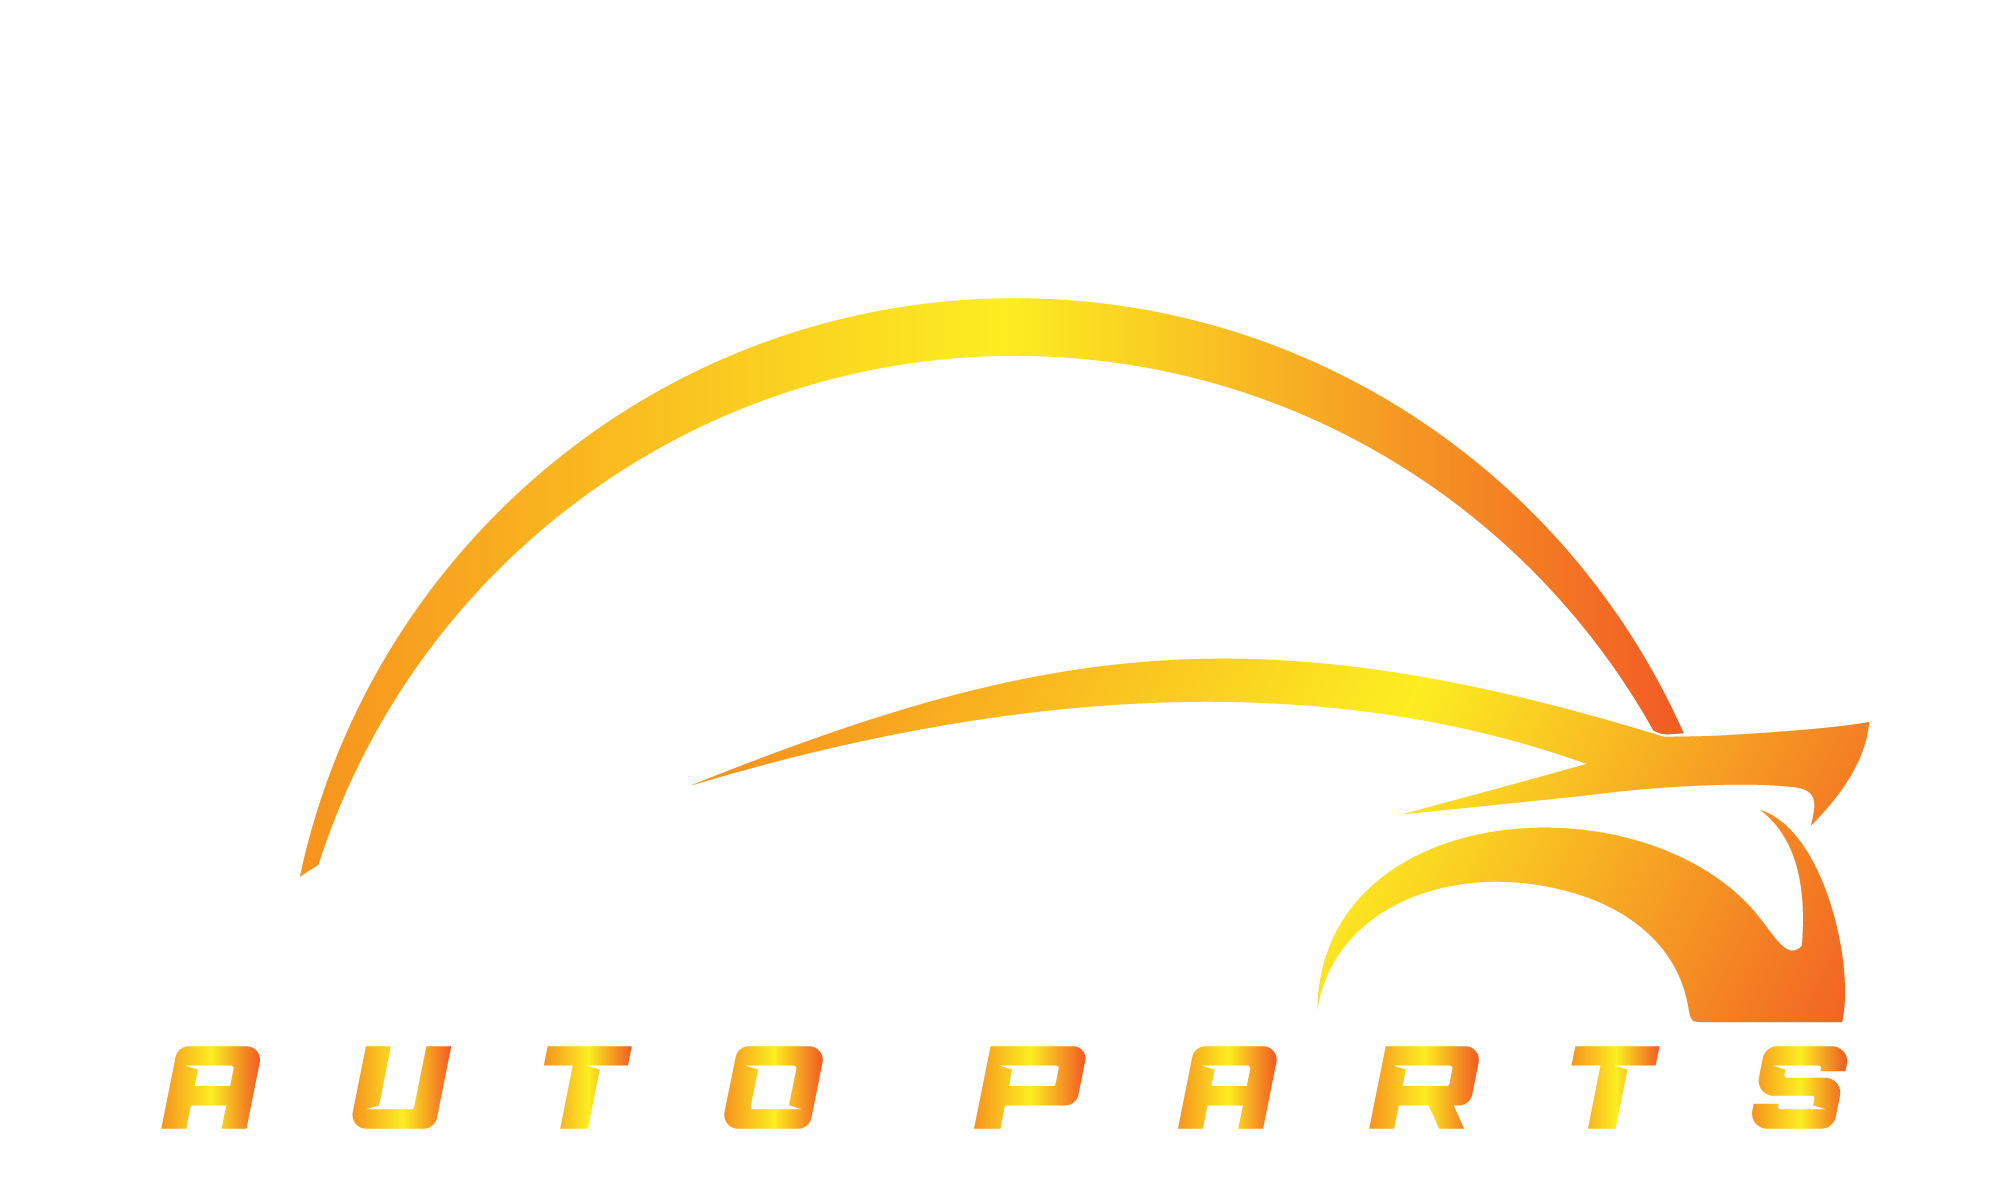 Bee Used Auto Parts, Inc.